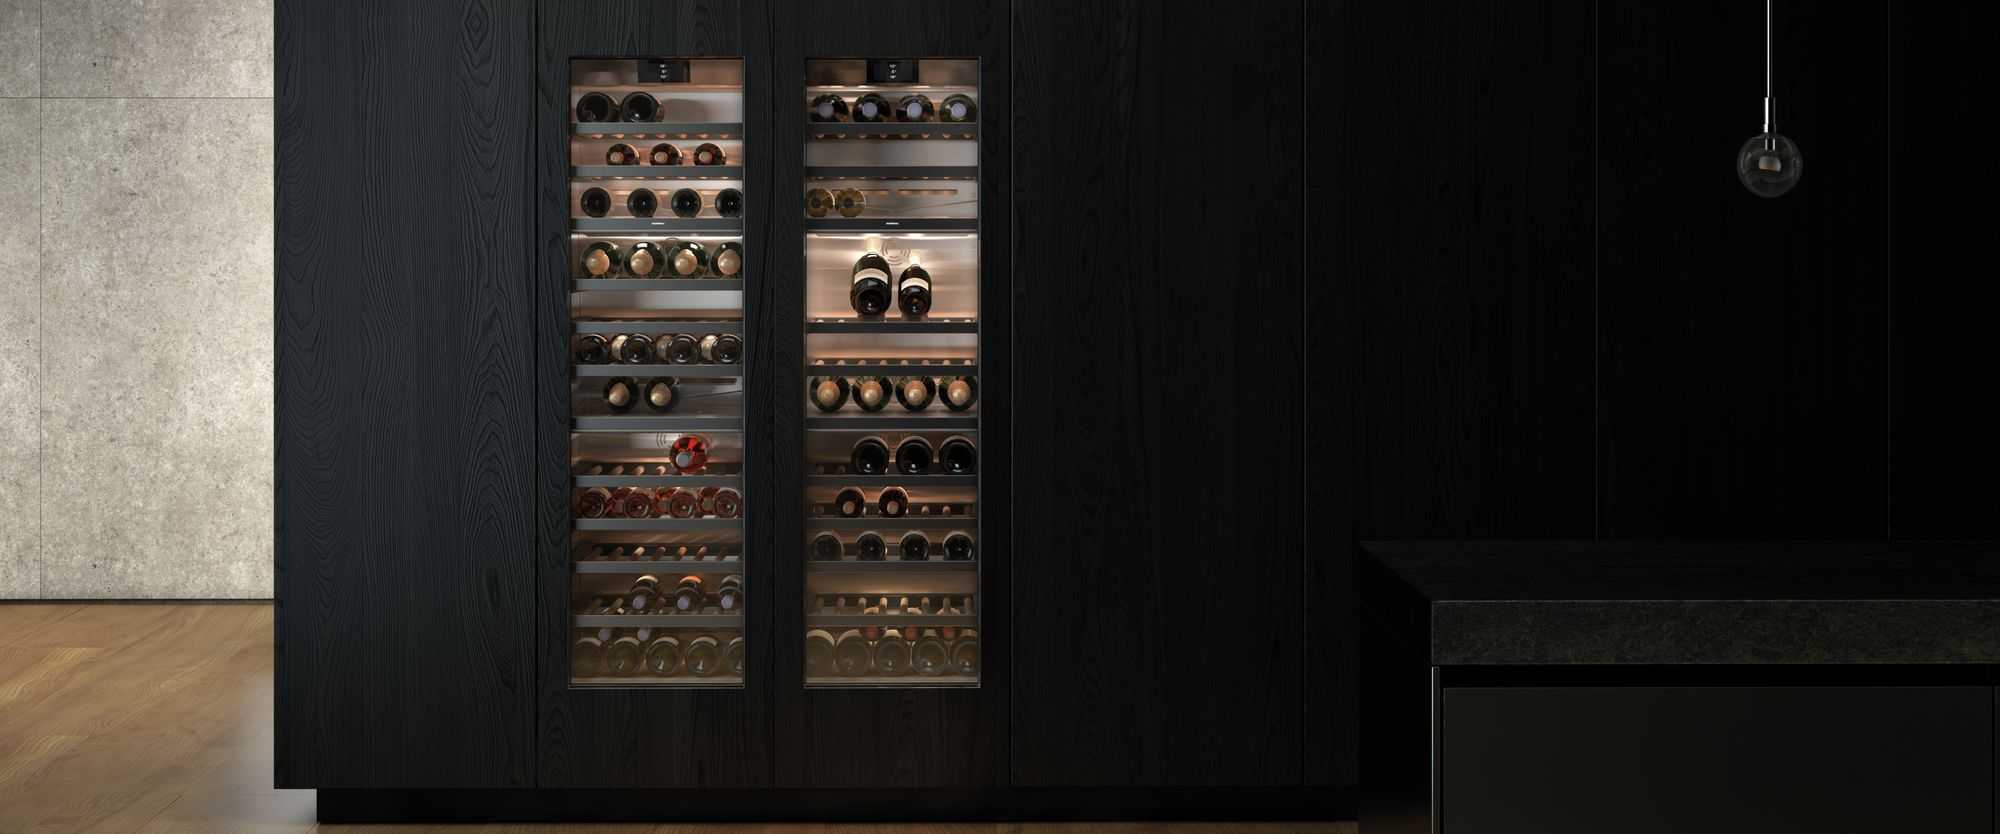 Gaggenau Wine Cabinets Vario 400 series by FCI London